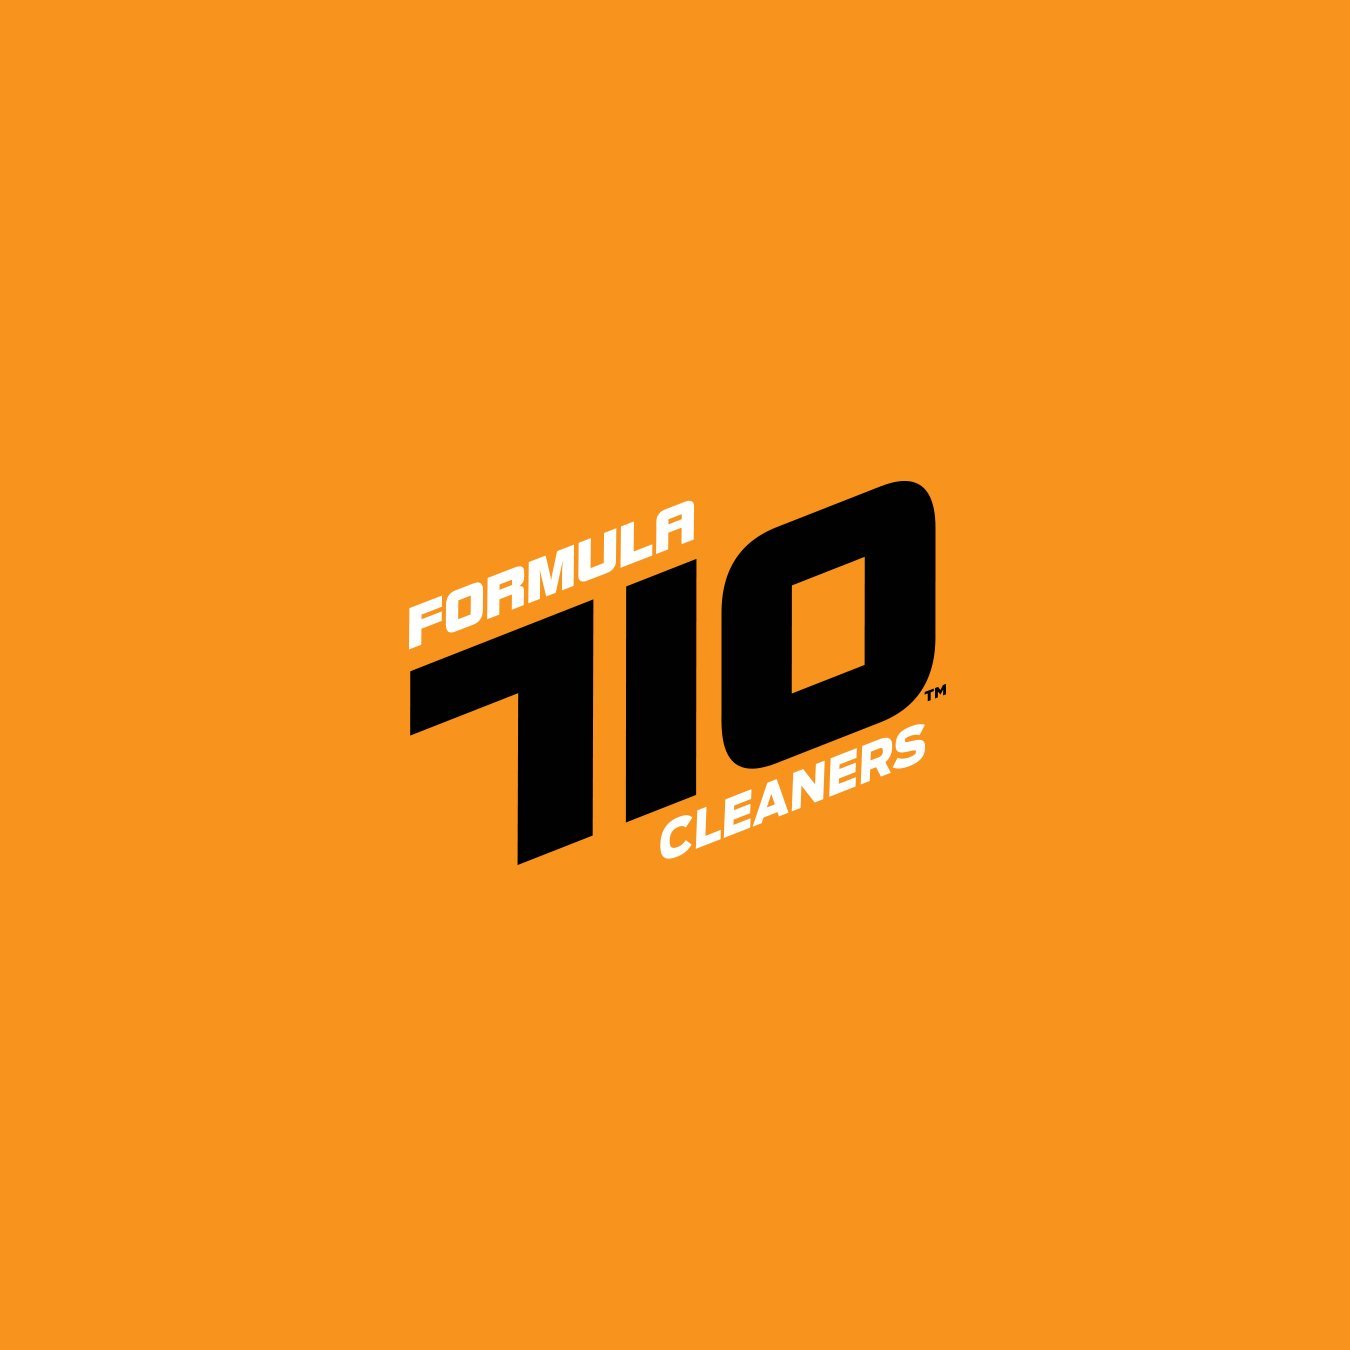 Formula 710 Instant Cleaners - SmokerAsh